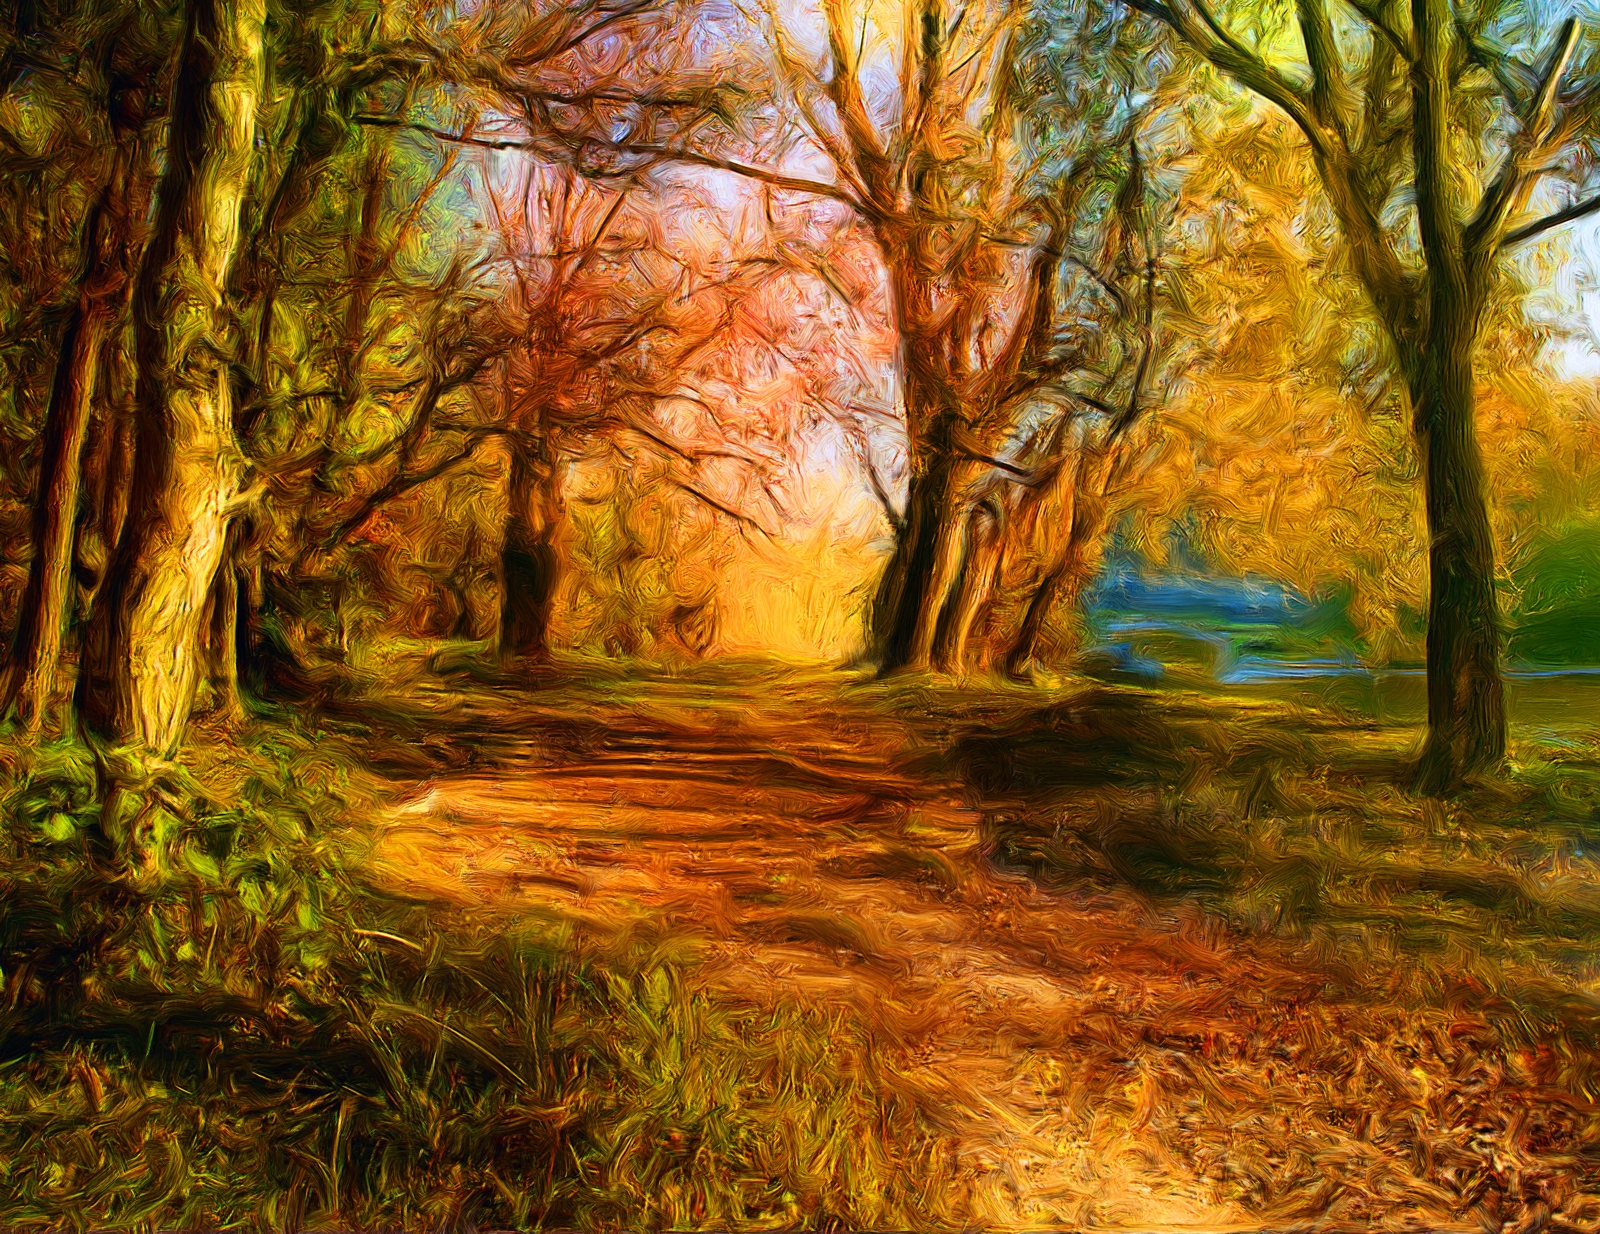 Leinwandbild Gemälde Wald in Herbsttönen